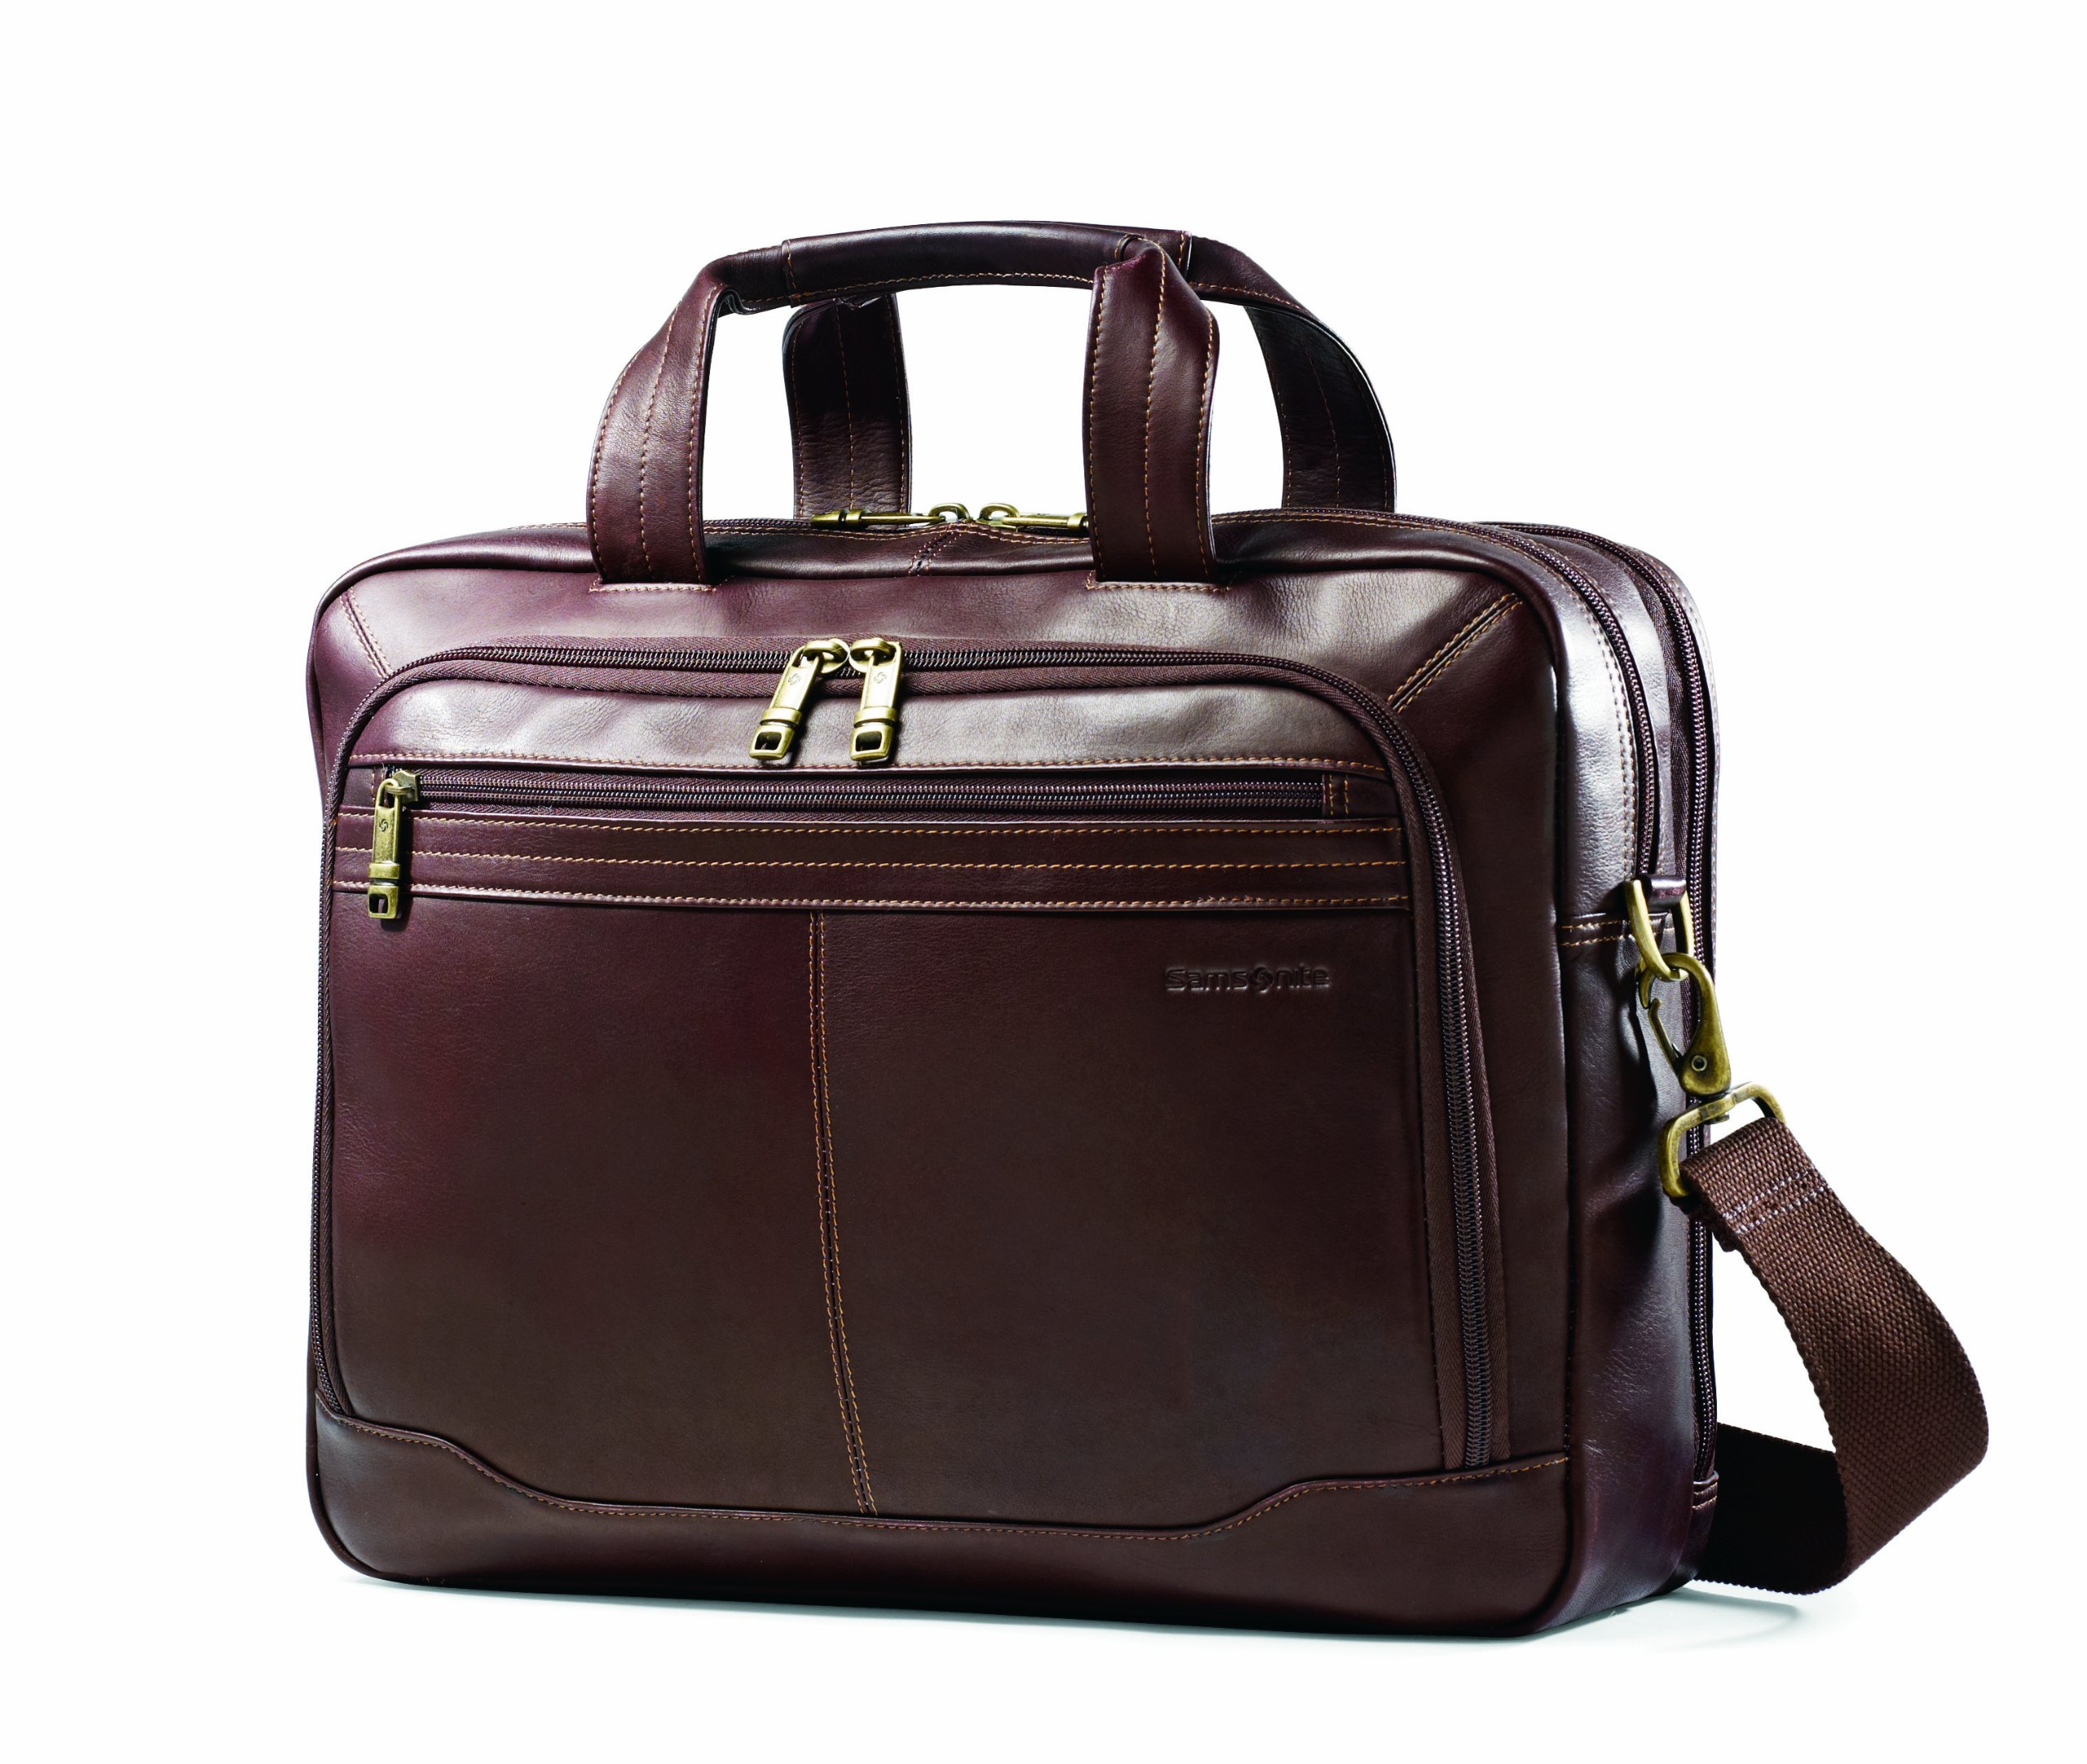 Samsonite Columbian Leather Briefcase, Brown, Top Loader